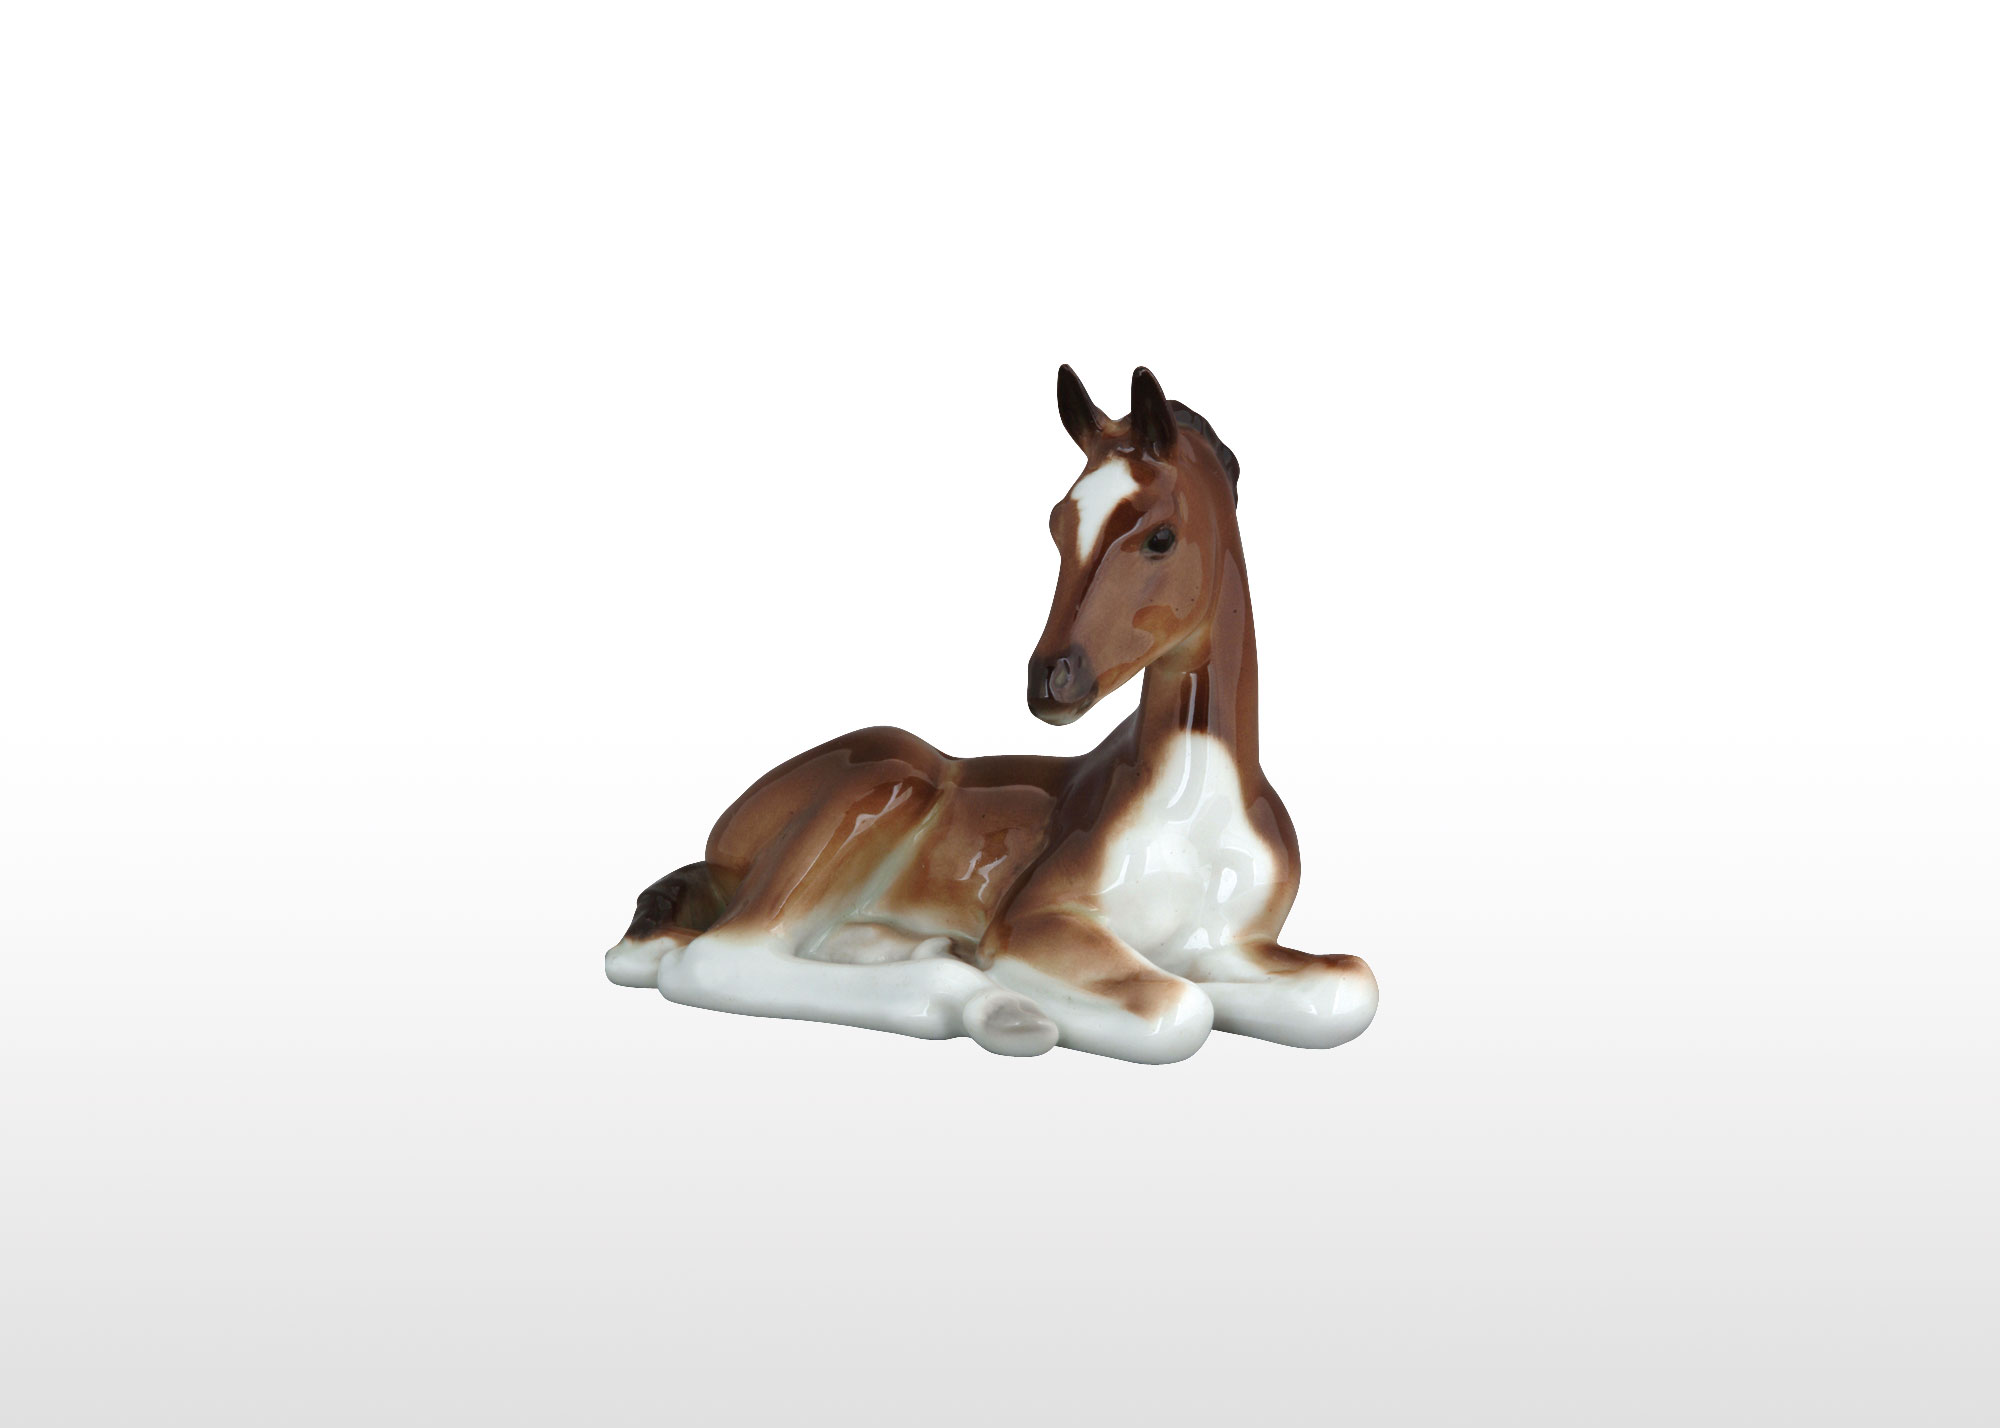 Buy Bay Foal Lying Figurine at GoldenCockerel.com